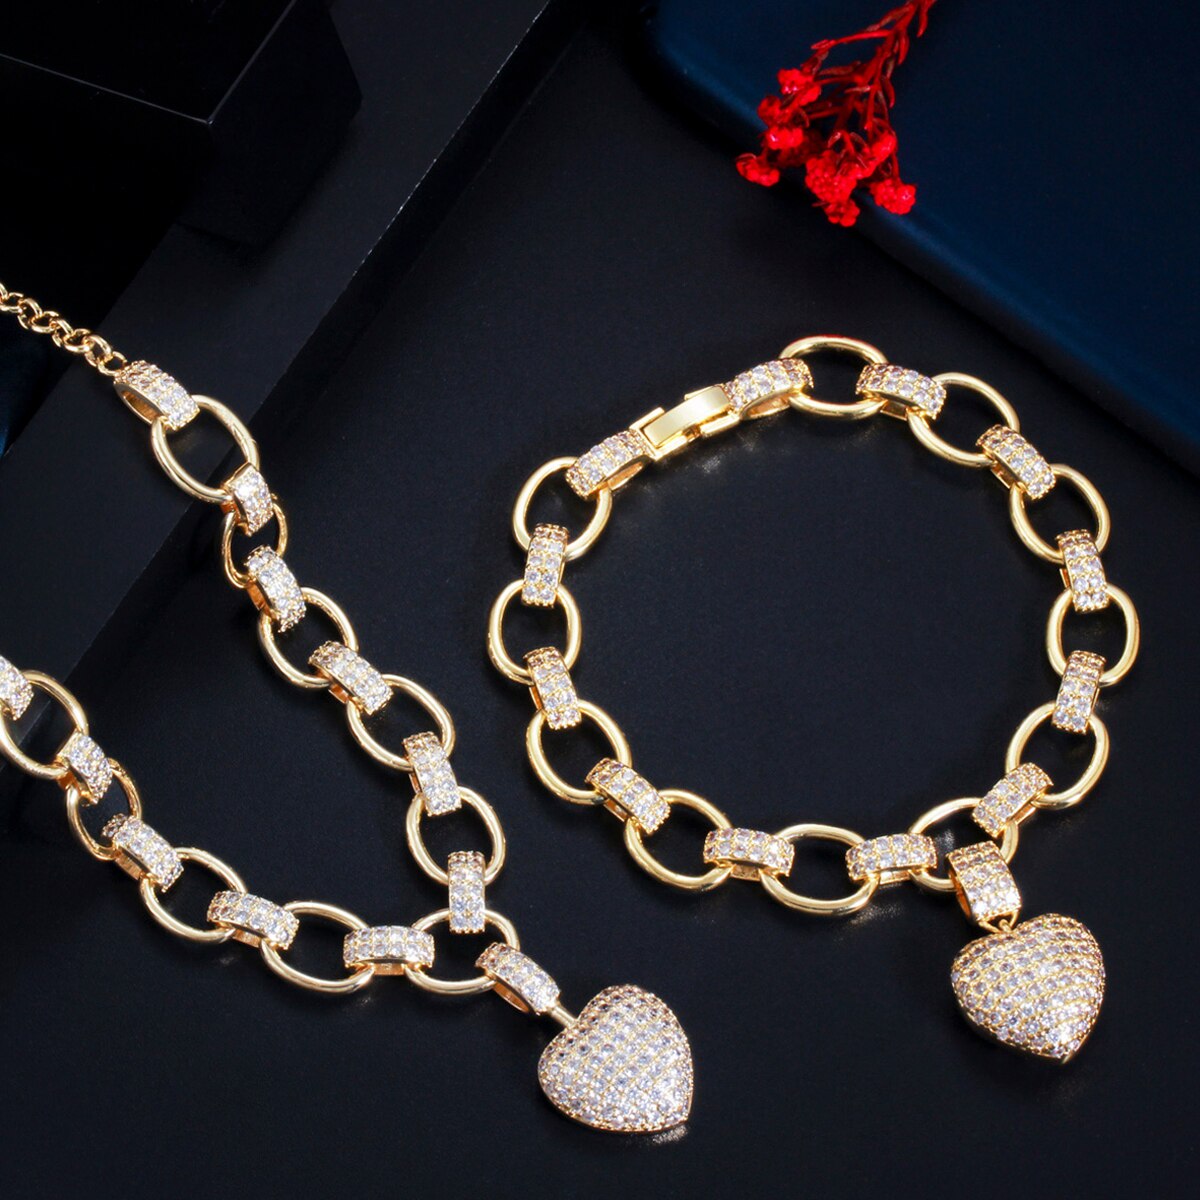 ThreeGraces-Luxury-Cubic-Zirconia-Stone-Yellow-Gold-Color-Love-Heart-Pendant-Necklace-Bracelet-Set-f-1005003297996366-8